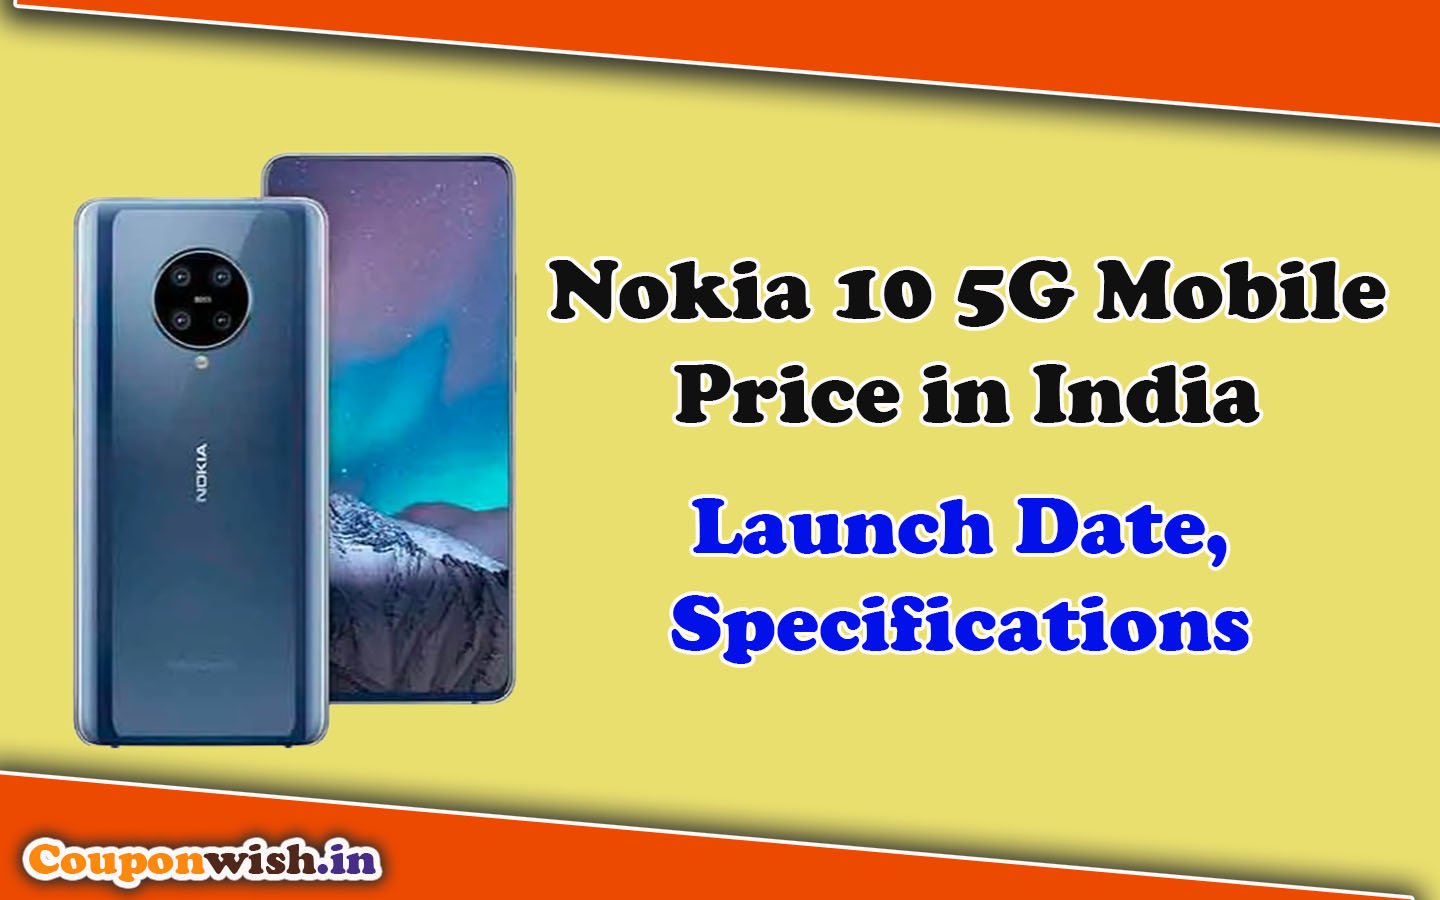 Nokia 10 5G Mobile Price in India